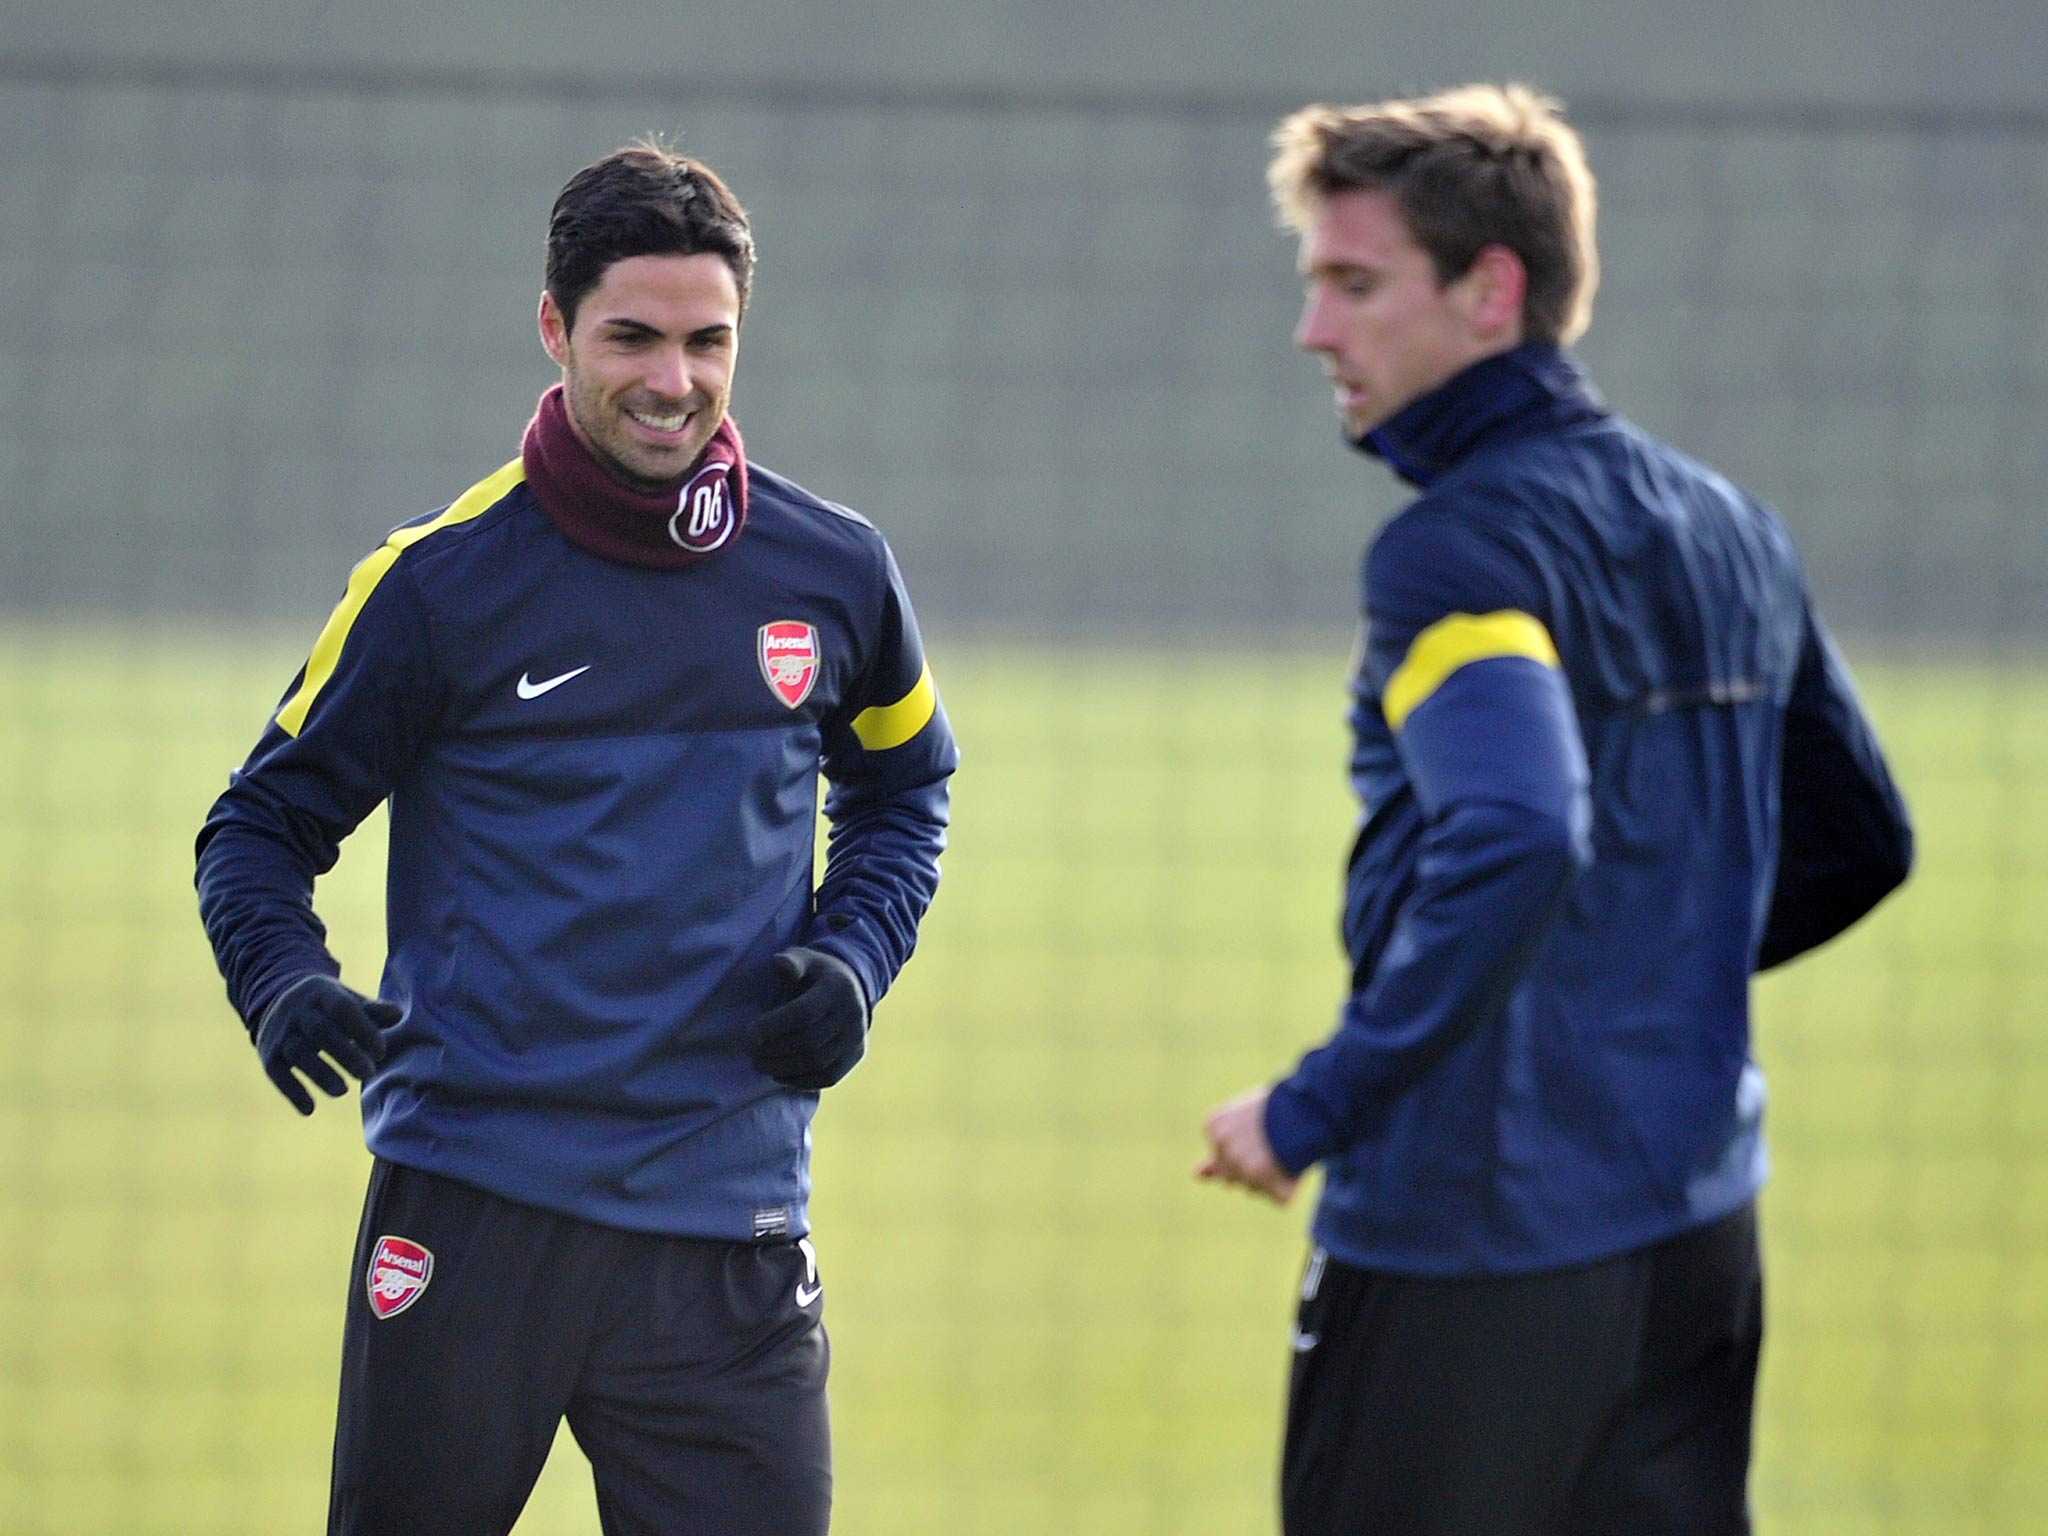 Arsenal's Spanish midfielder Mikel Arteta (left) trains alongside fellow Spaniard Nacho Monreal